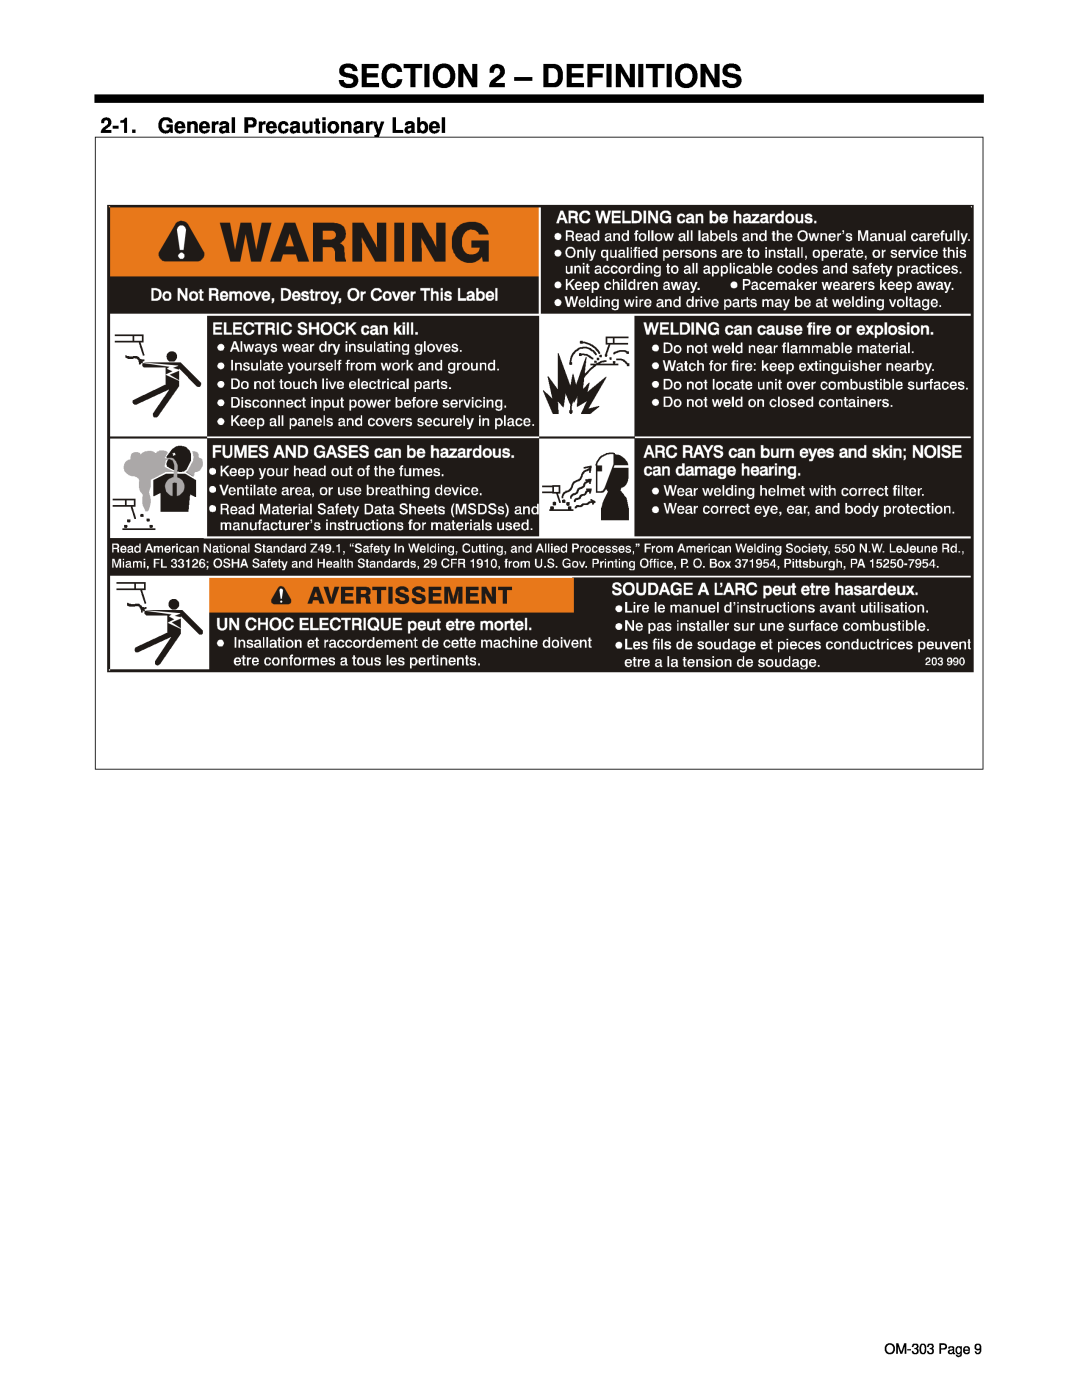 Hobart OM-303 manual Definitions, General Precautionary Label 